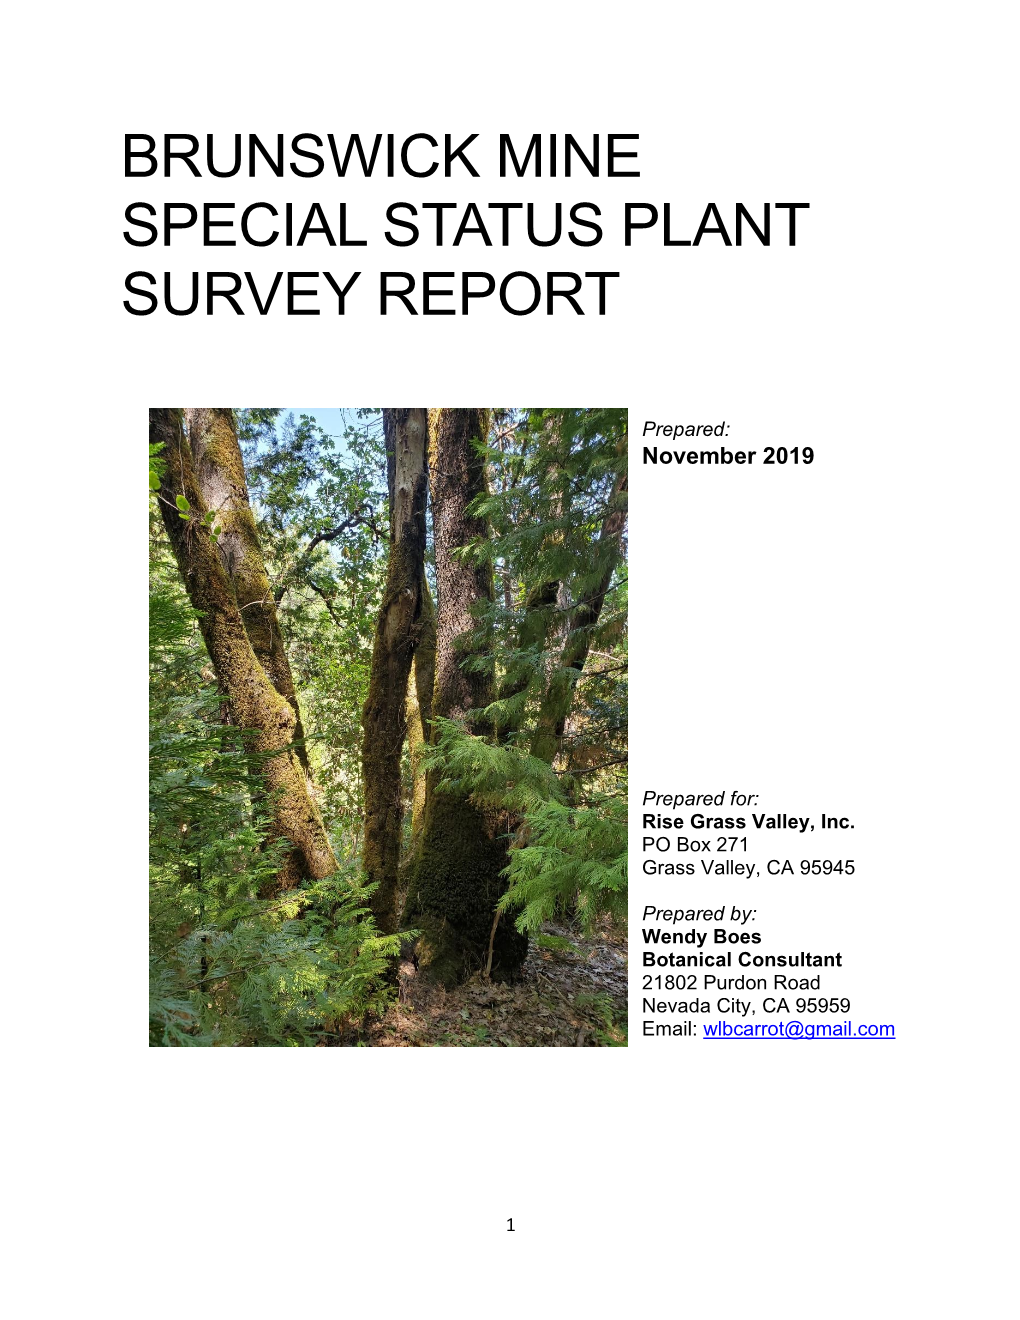 Special Status Plant Survey Report